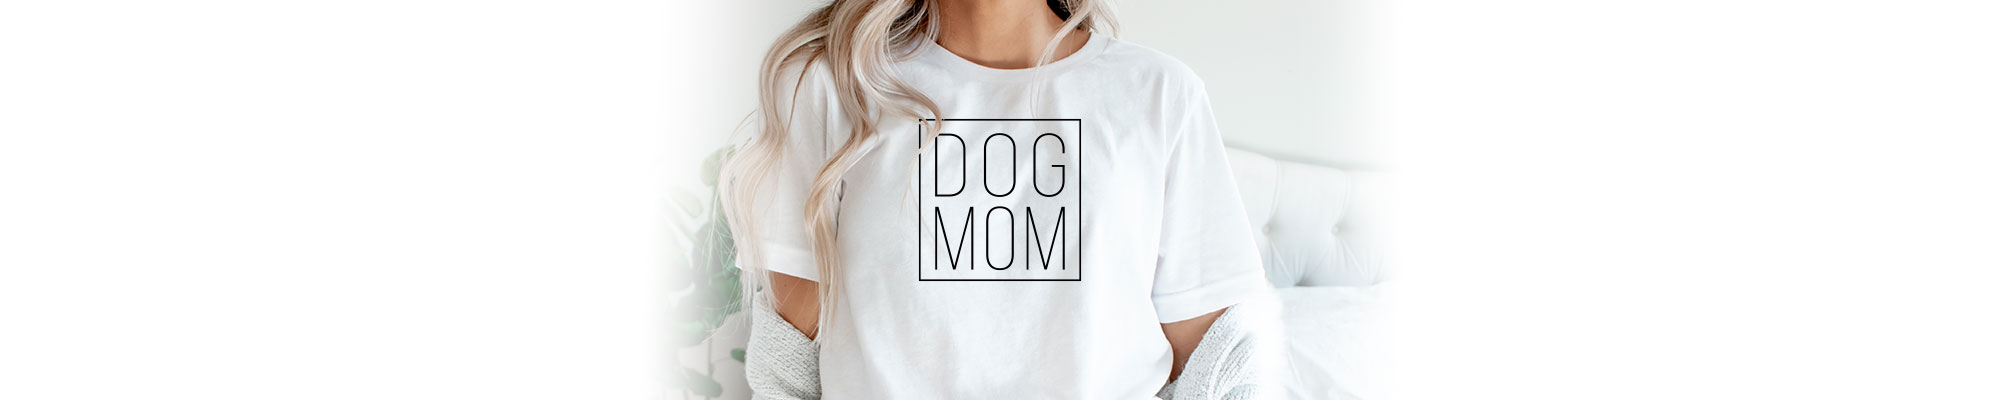 dog mom shirt banner image